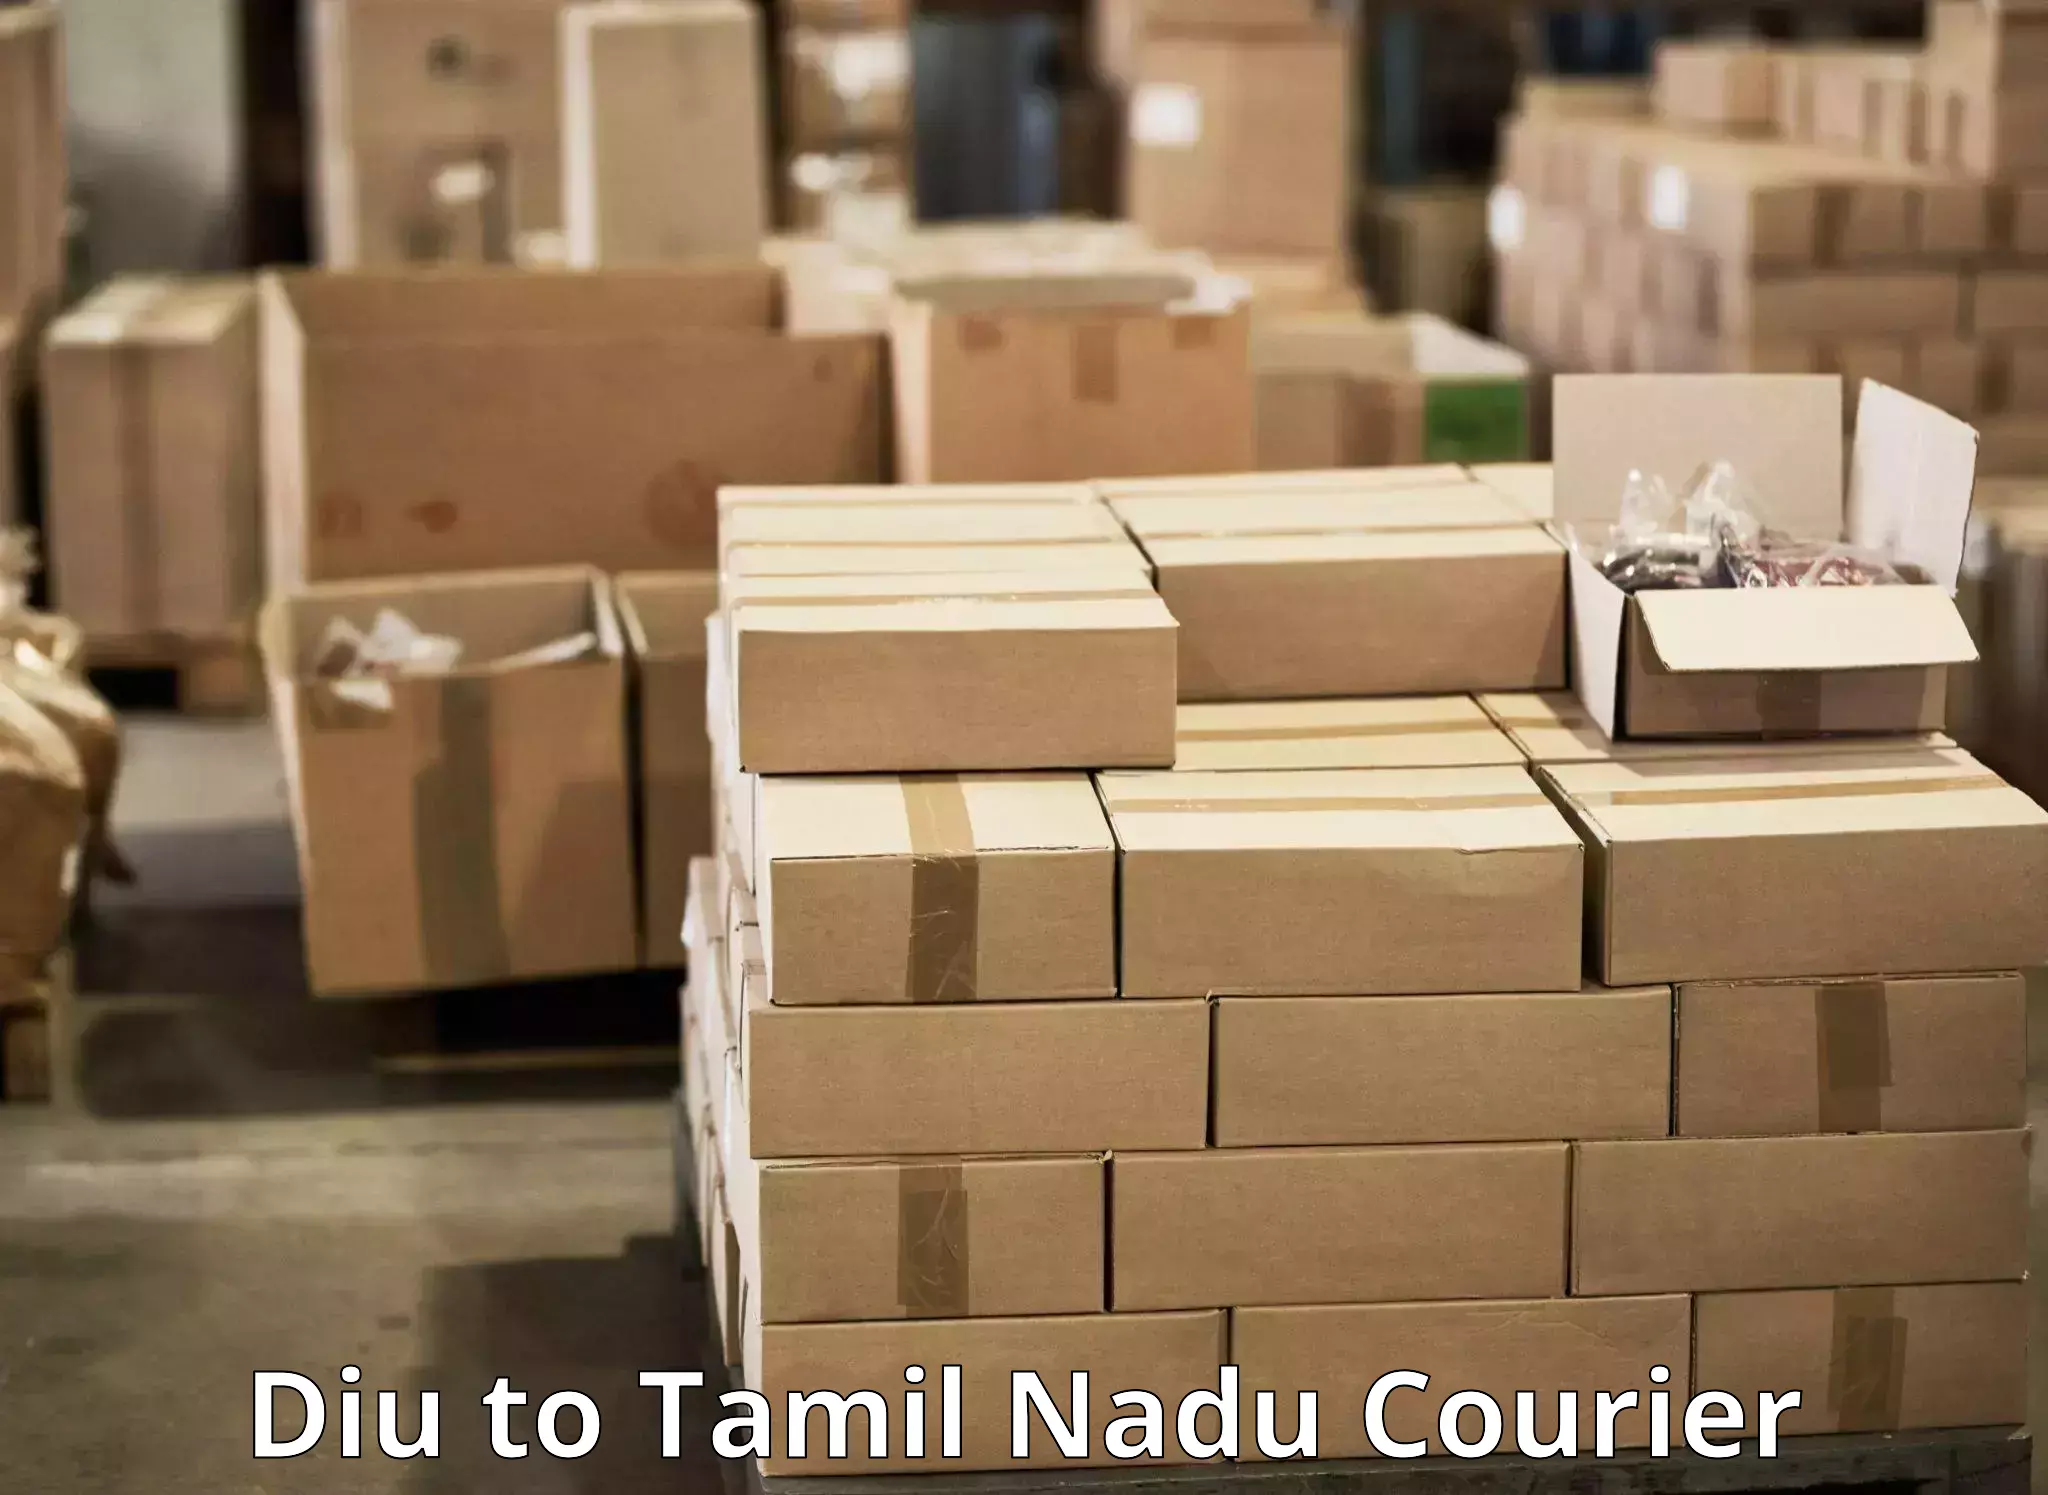 Quick parcel dispatch Diu to Cuddalore